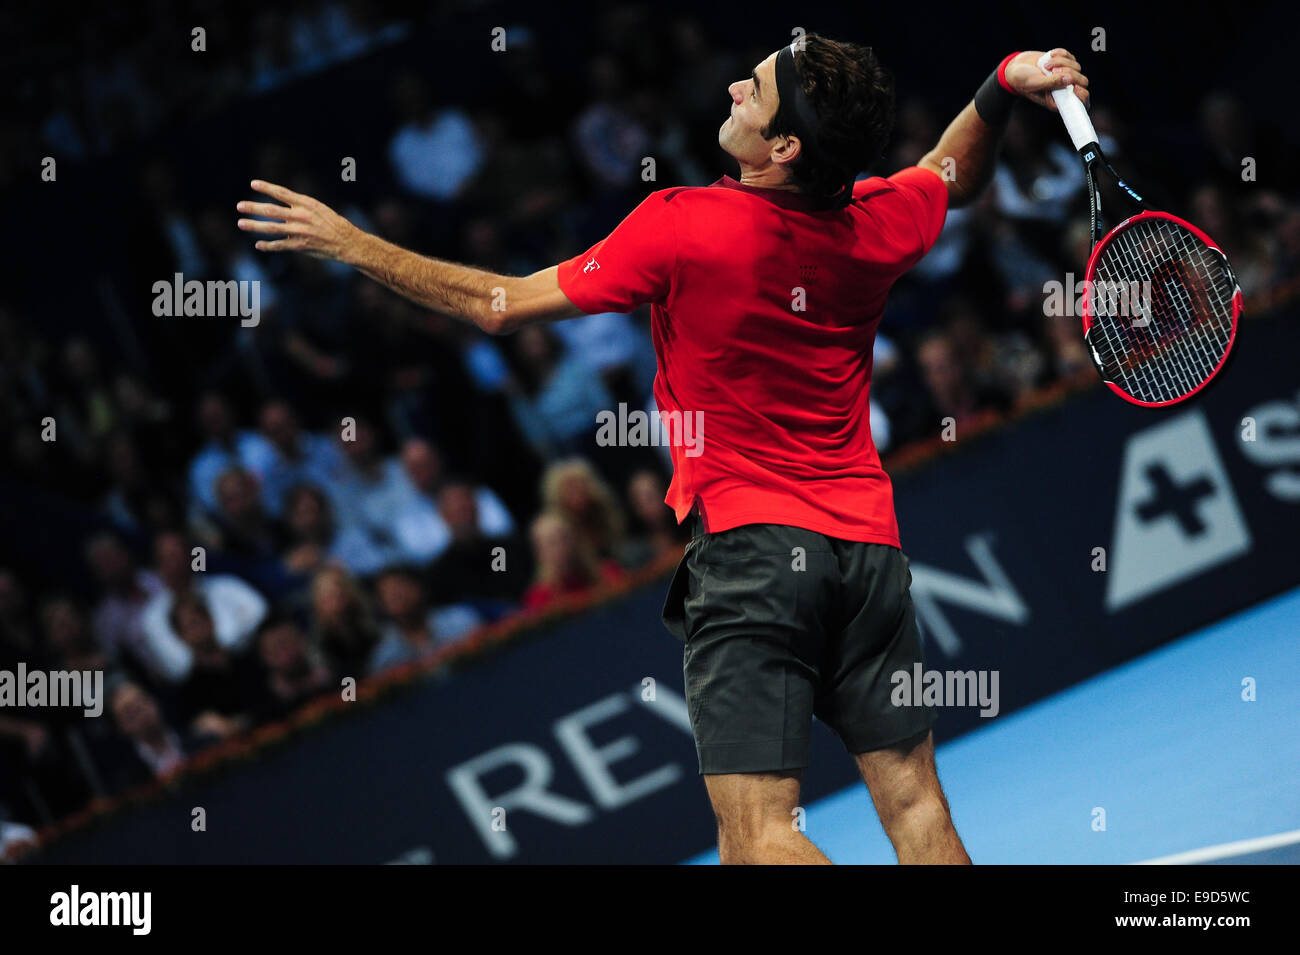 Basel, Svizzera. 25 ottobre, 2014. Roger Federer salta per un smash volley durante la semifinale della Swiss interni a St. Jakobshalle. Foto: Miroslav Dakov/ Alamy Live News Foto Stock